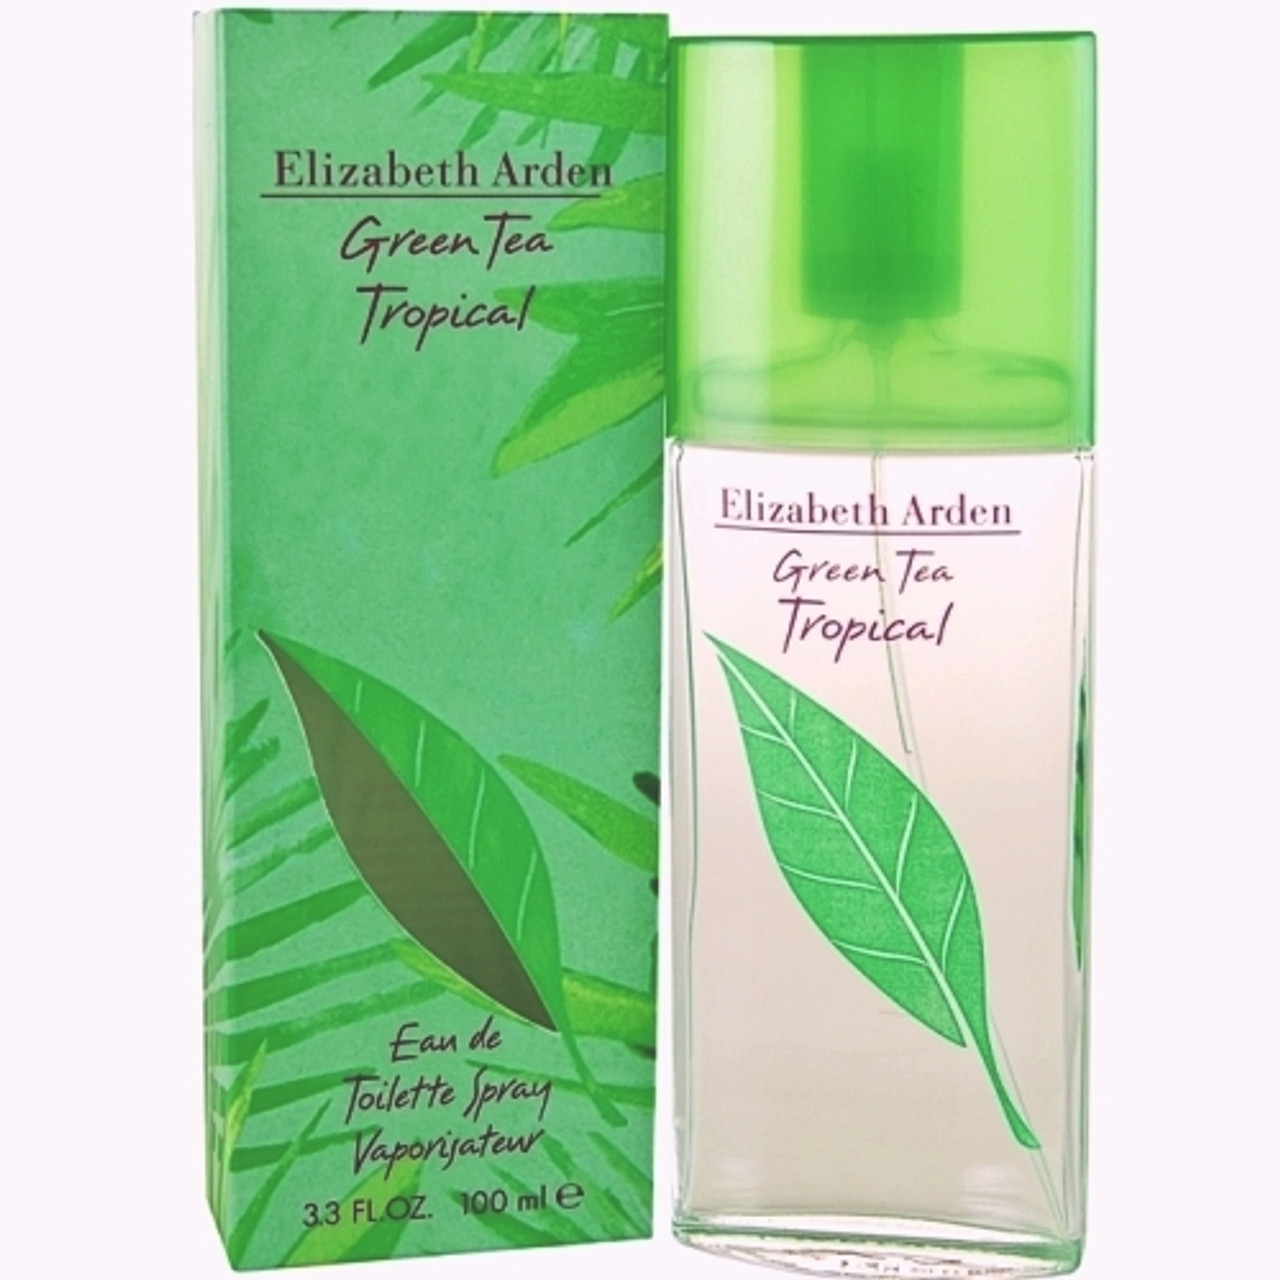 Green Tea Yuzu by Elizabeth Arden EDT Spray 3.3 oz